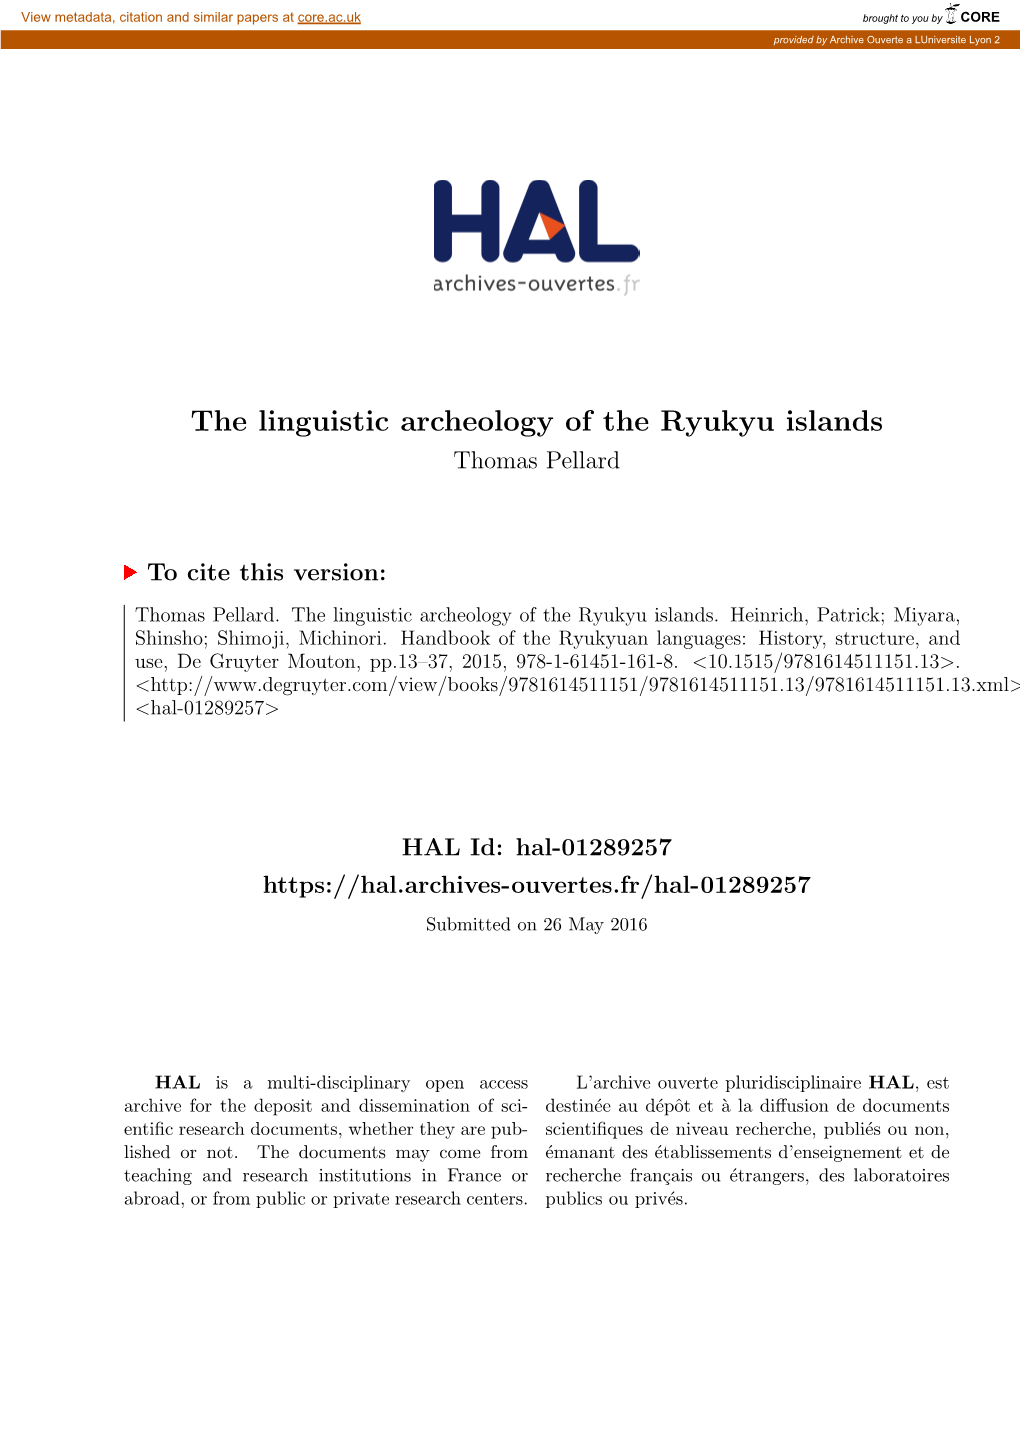 The Linguistic Archeology of the Ryukyu Islands Thomas Pellard